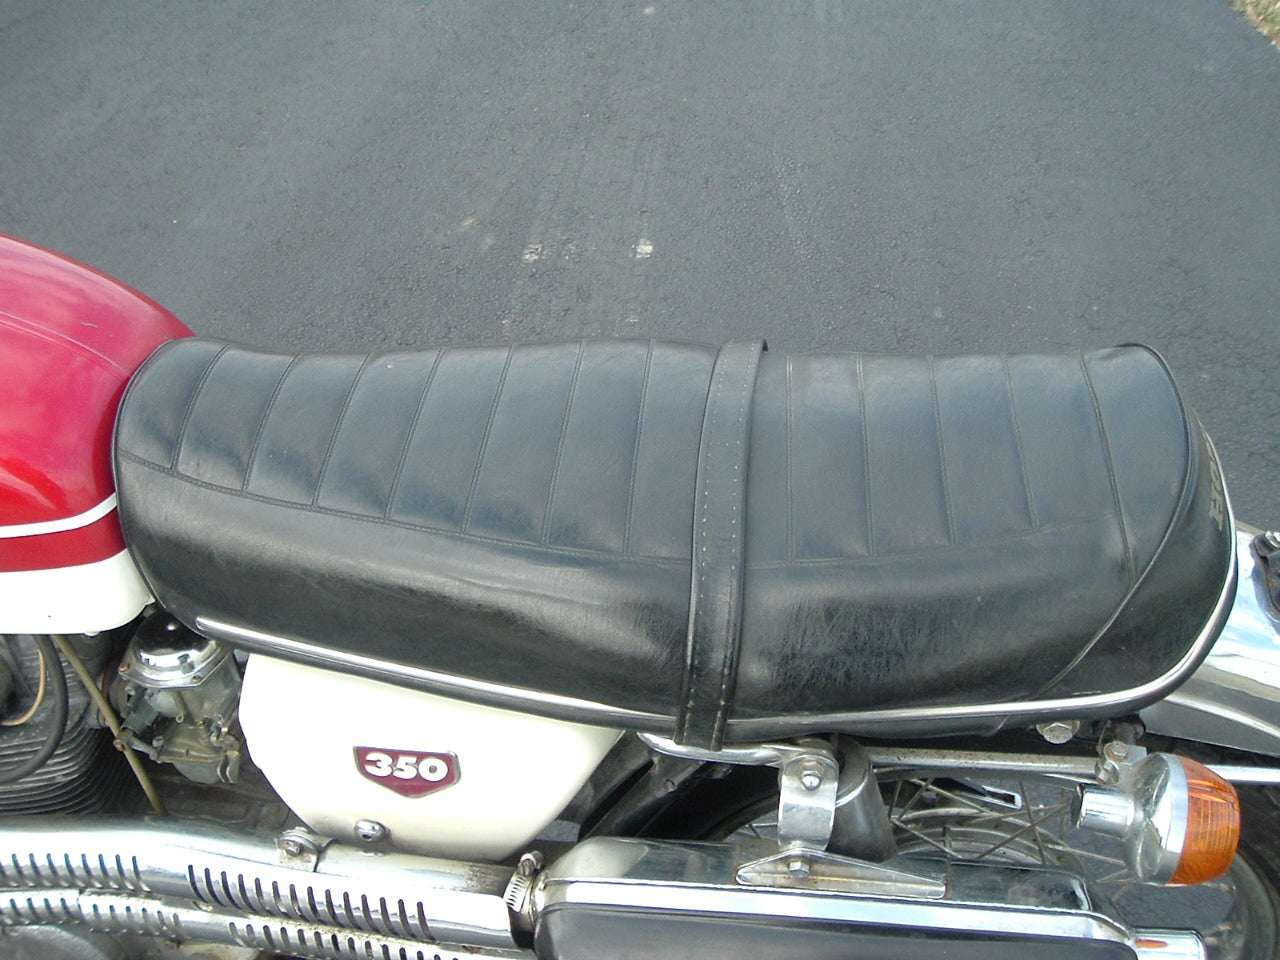 Motorcycle Seats